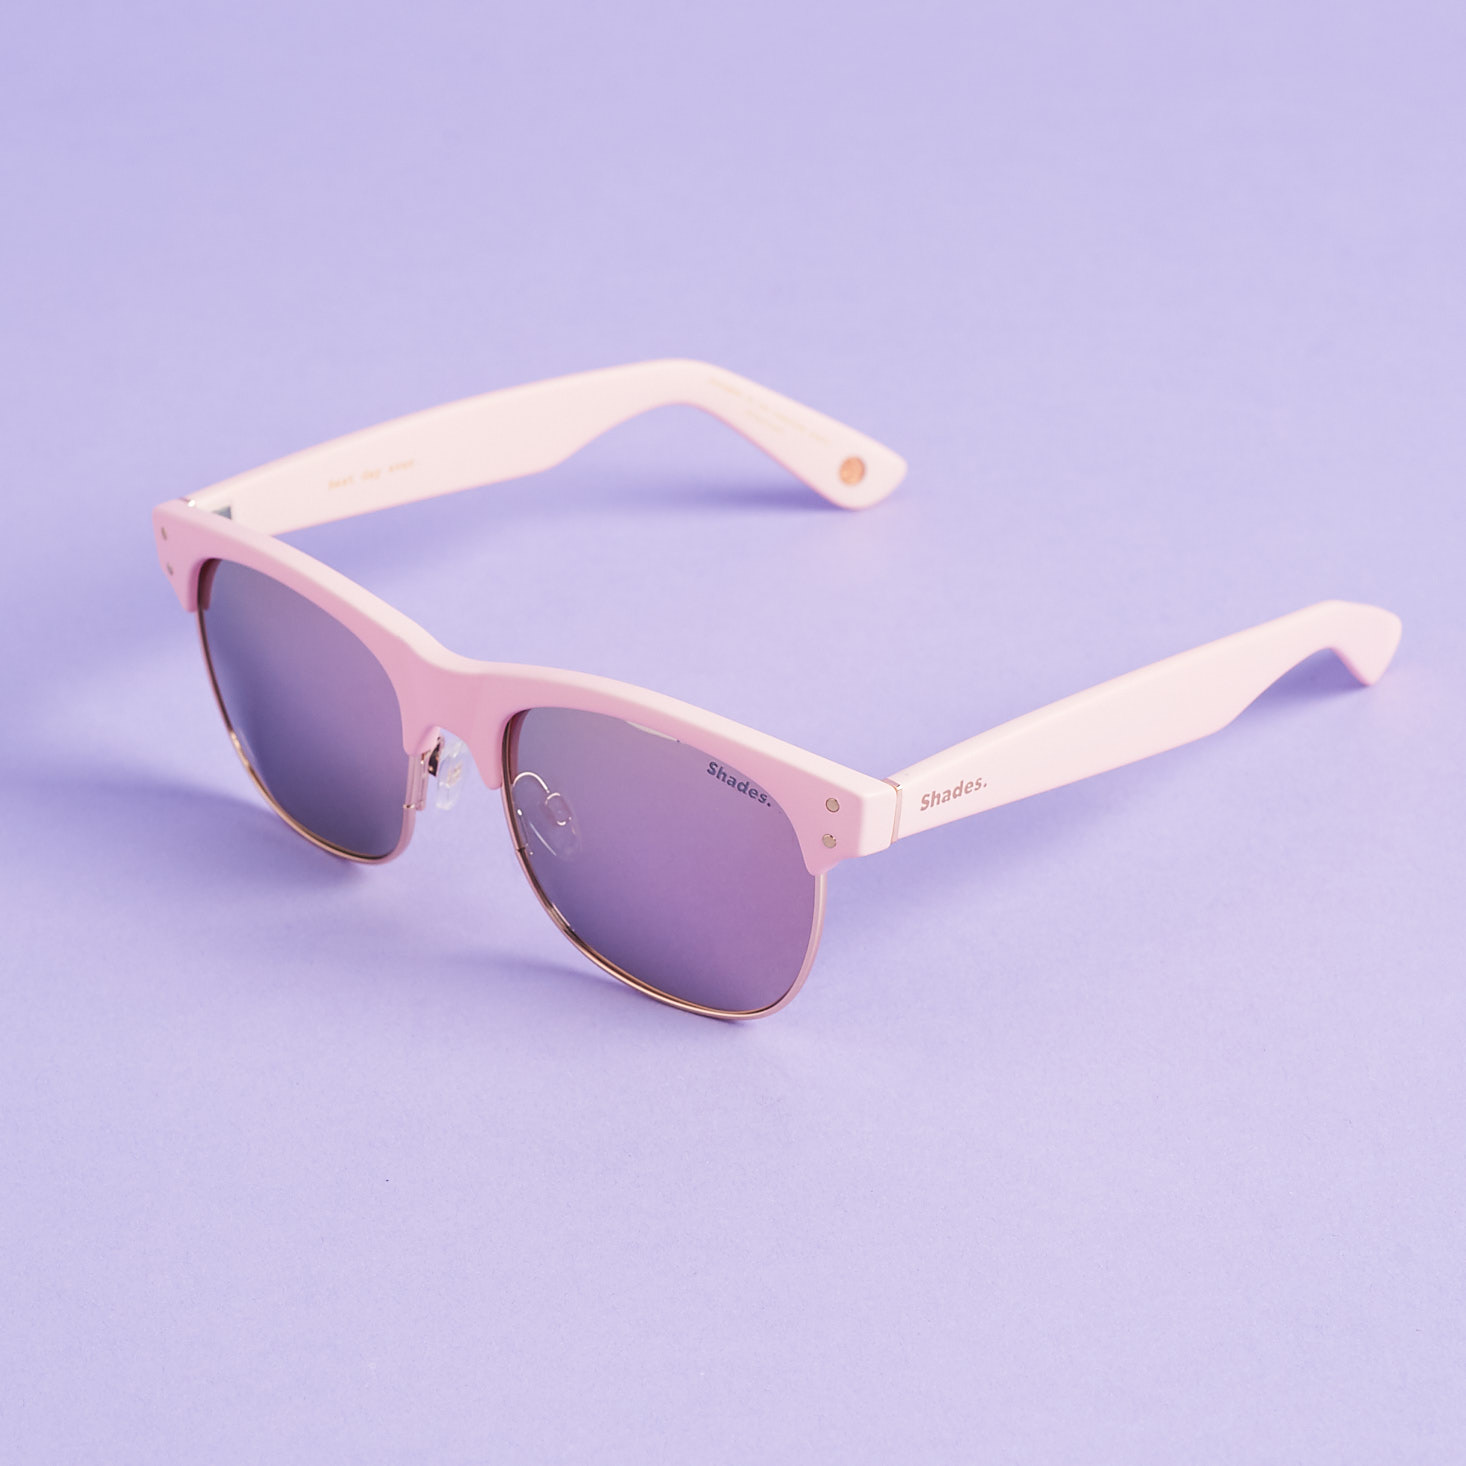 Pink Shades Club sunglasses - left side